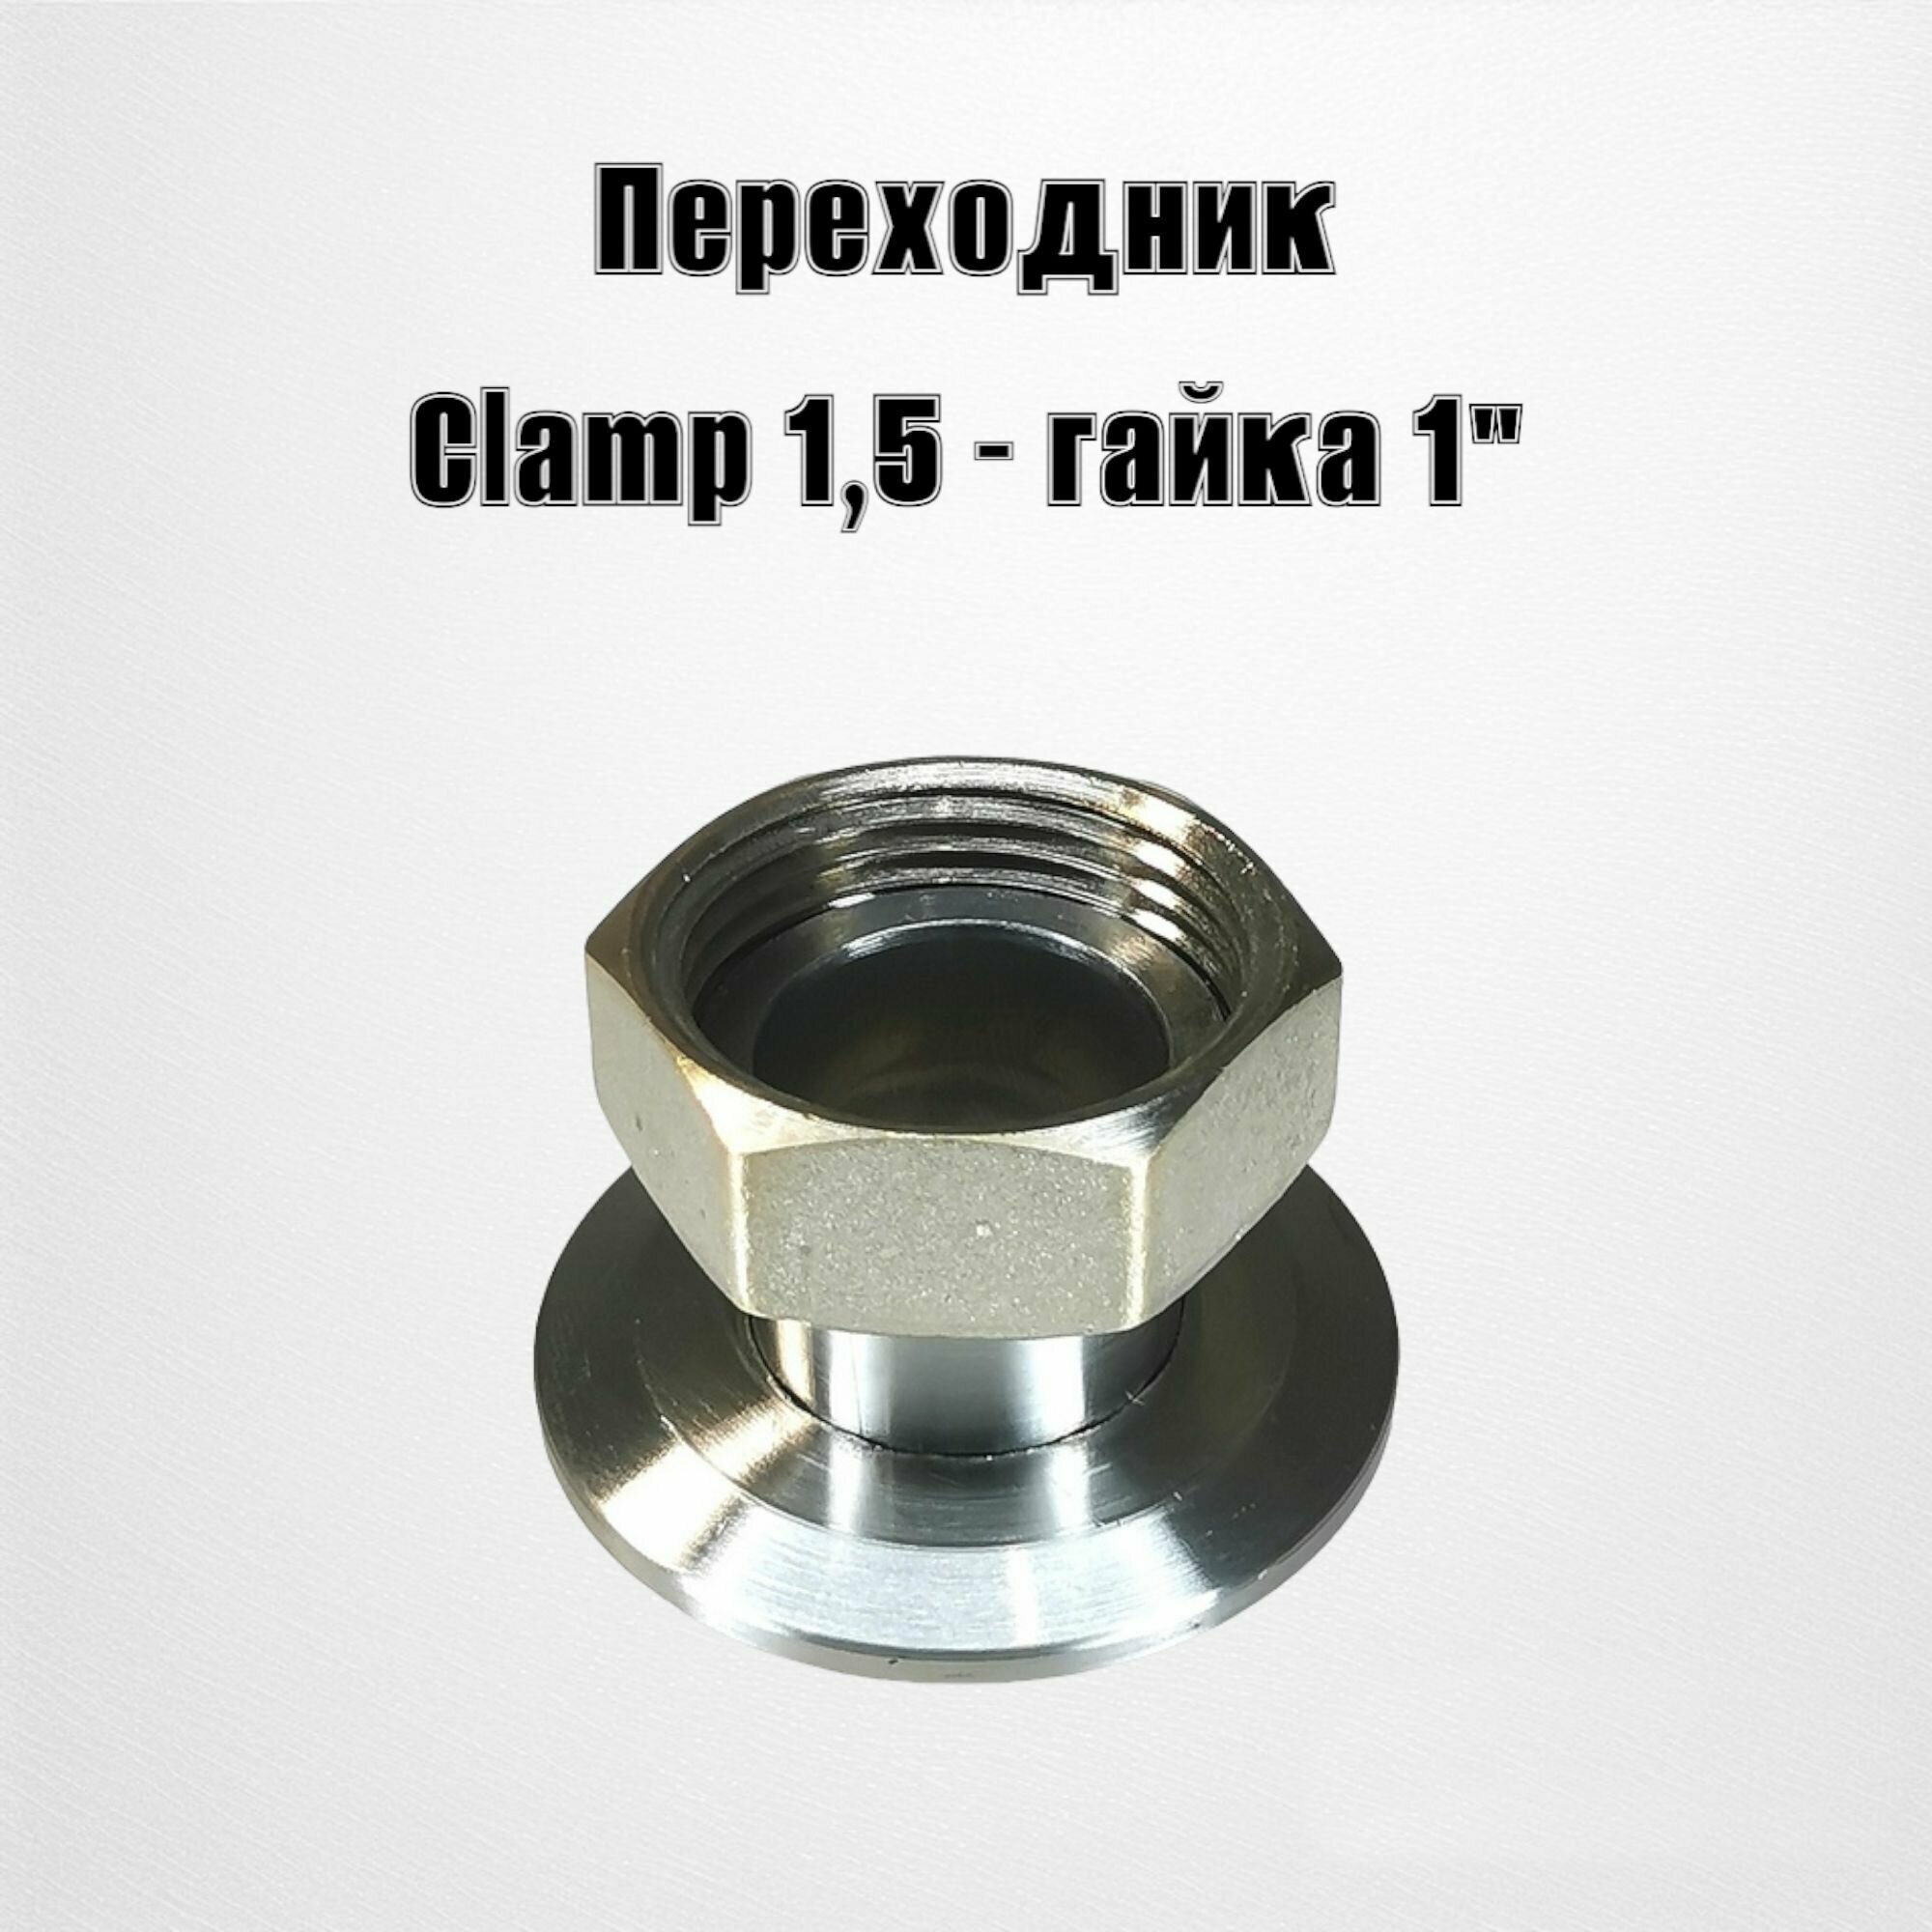 Адаптер переходник Clamp 1,5"- гайка 1" (ХД/4)